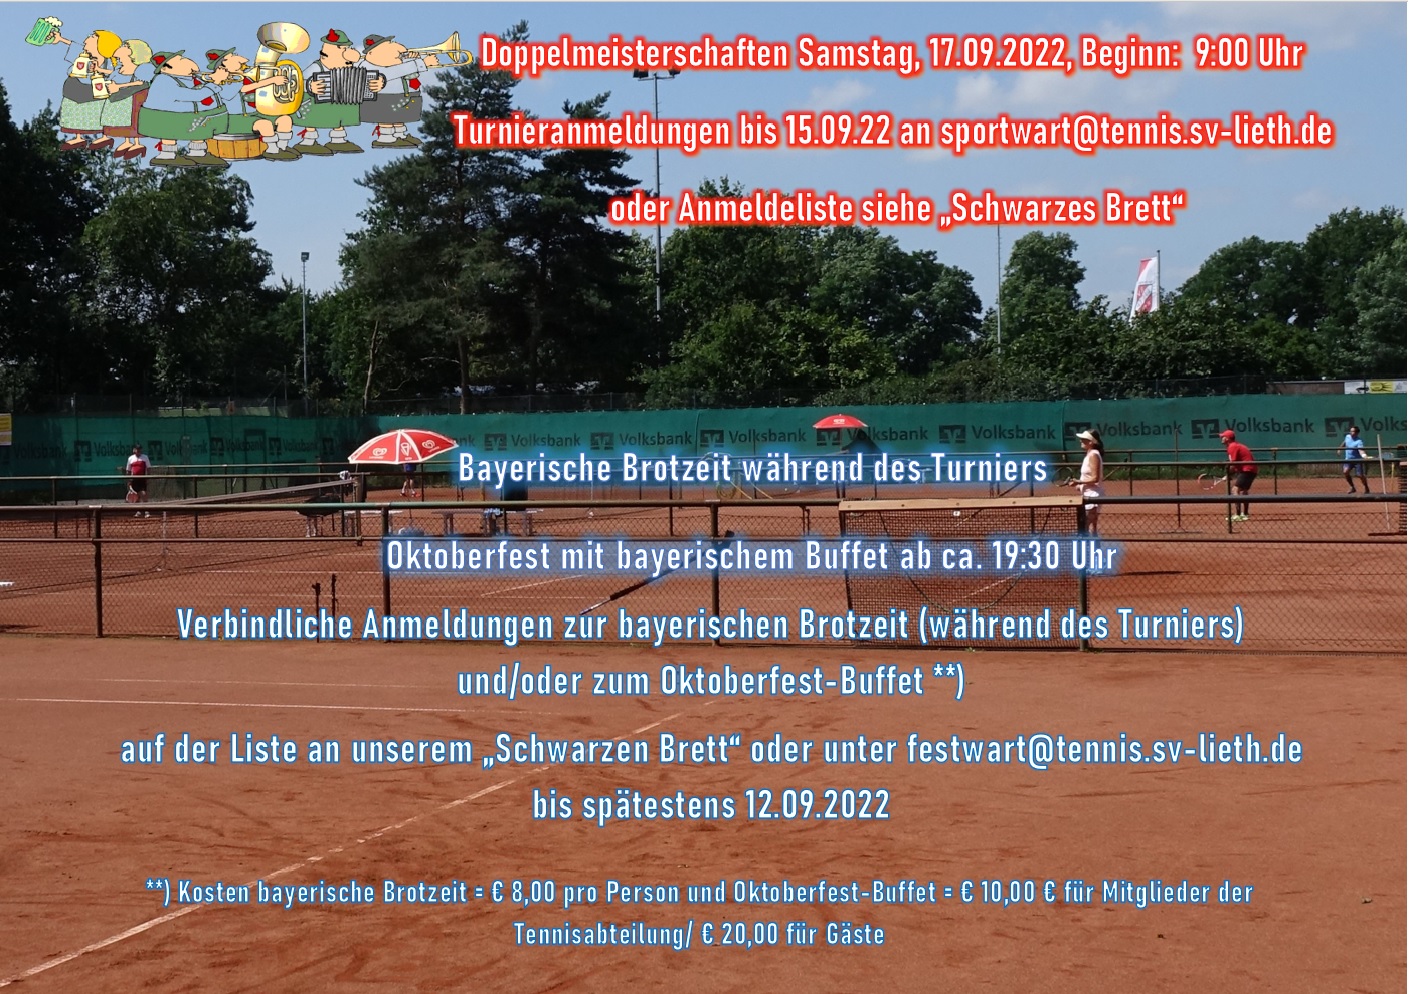 Doppelmeisterschaften und Oktoberfest am 17.09.2022